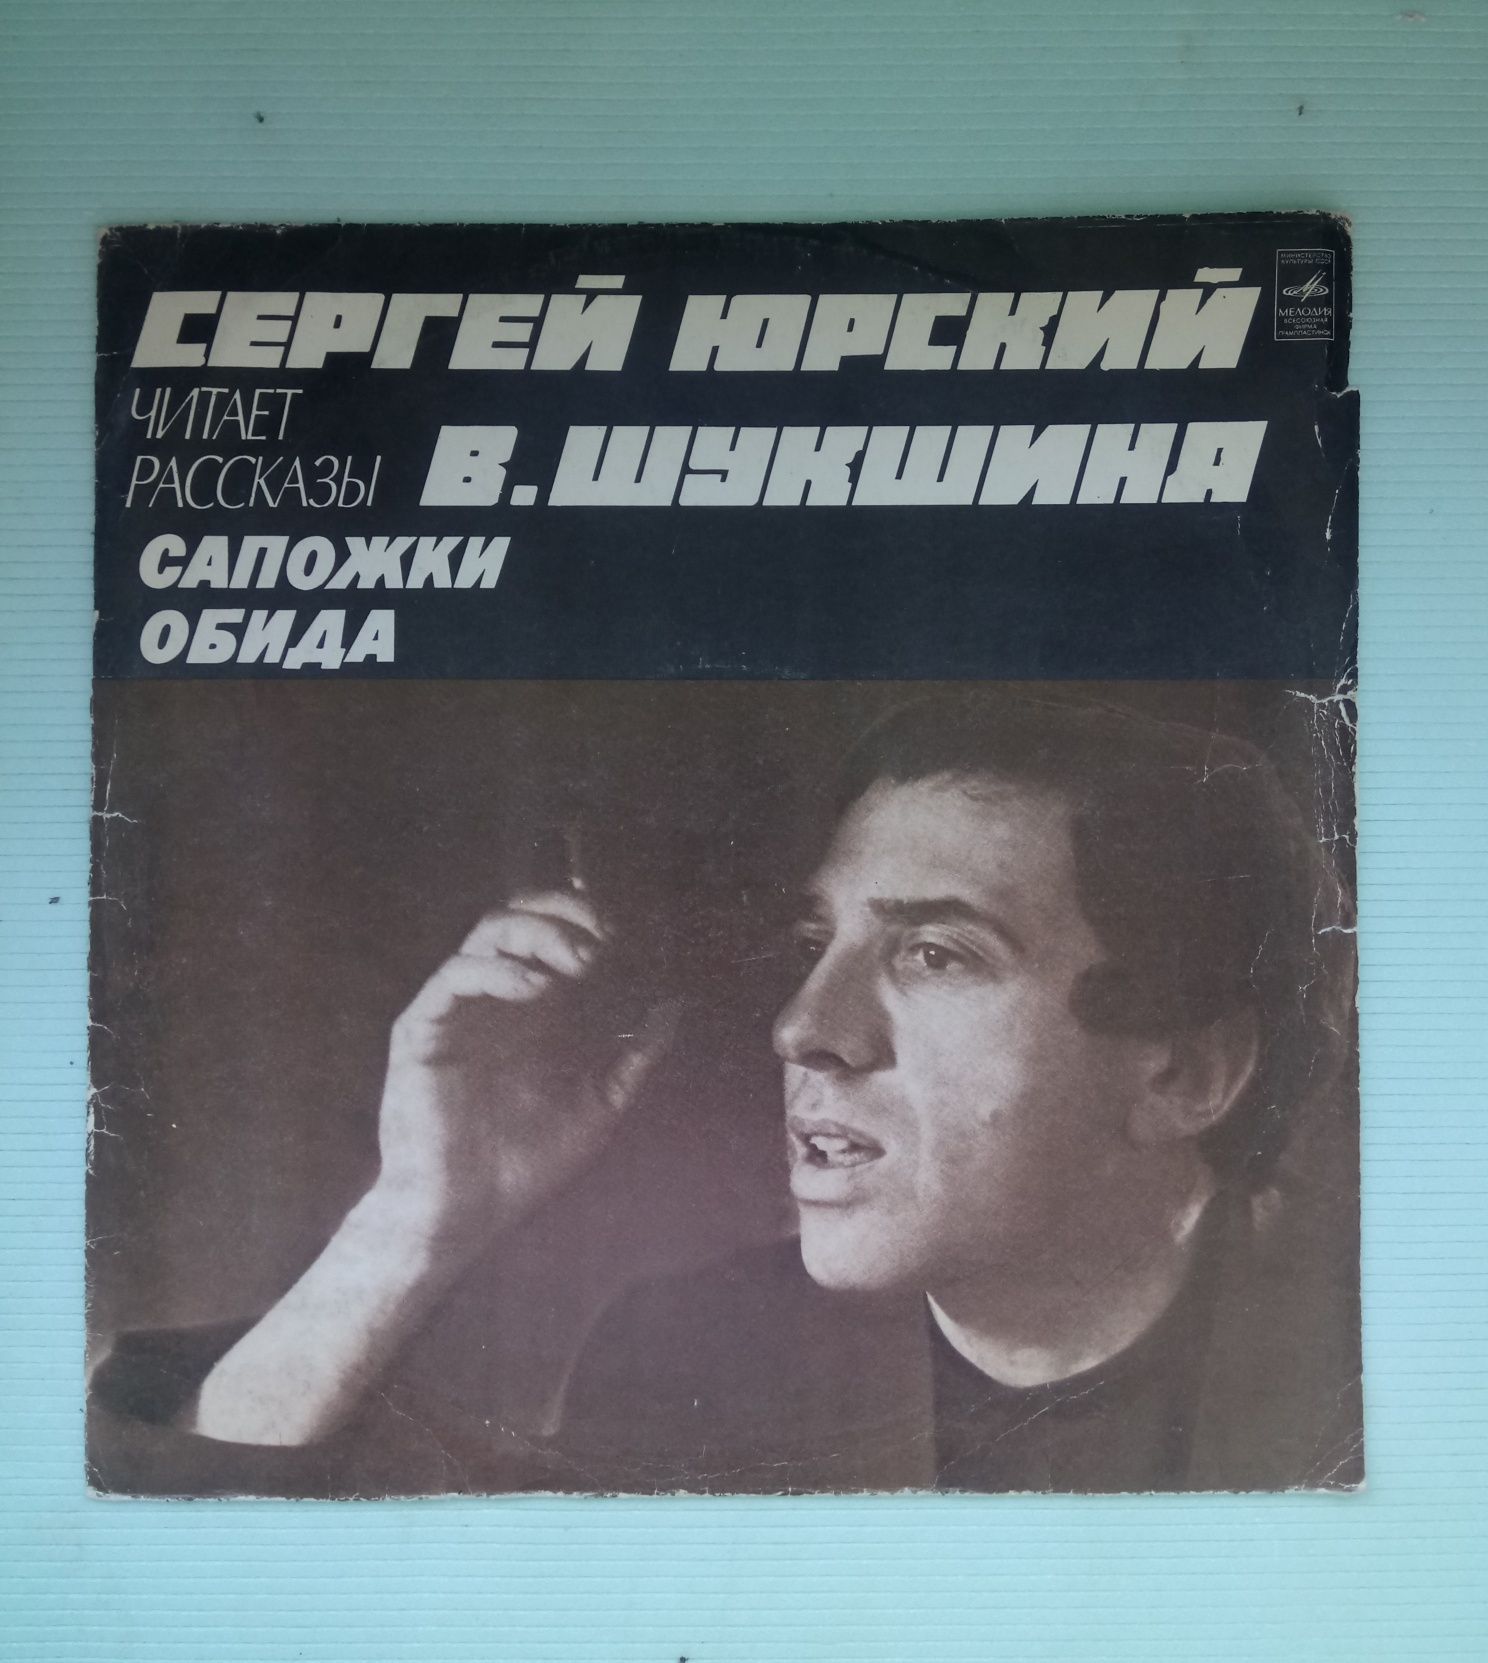 Пластинки из СССР, Мулерман, Эверест